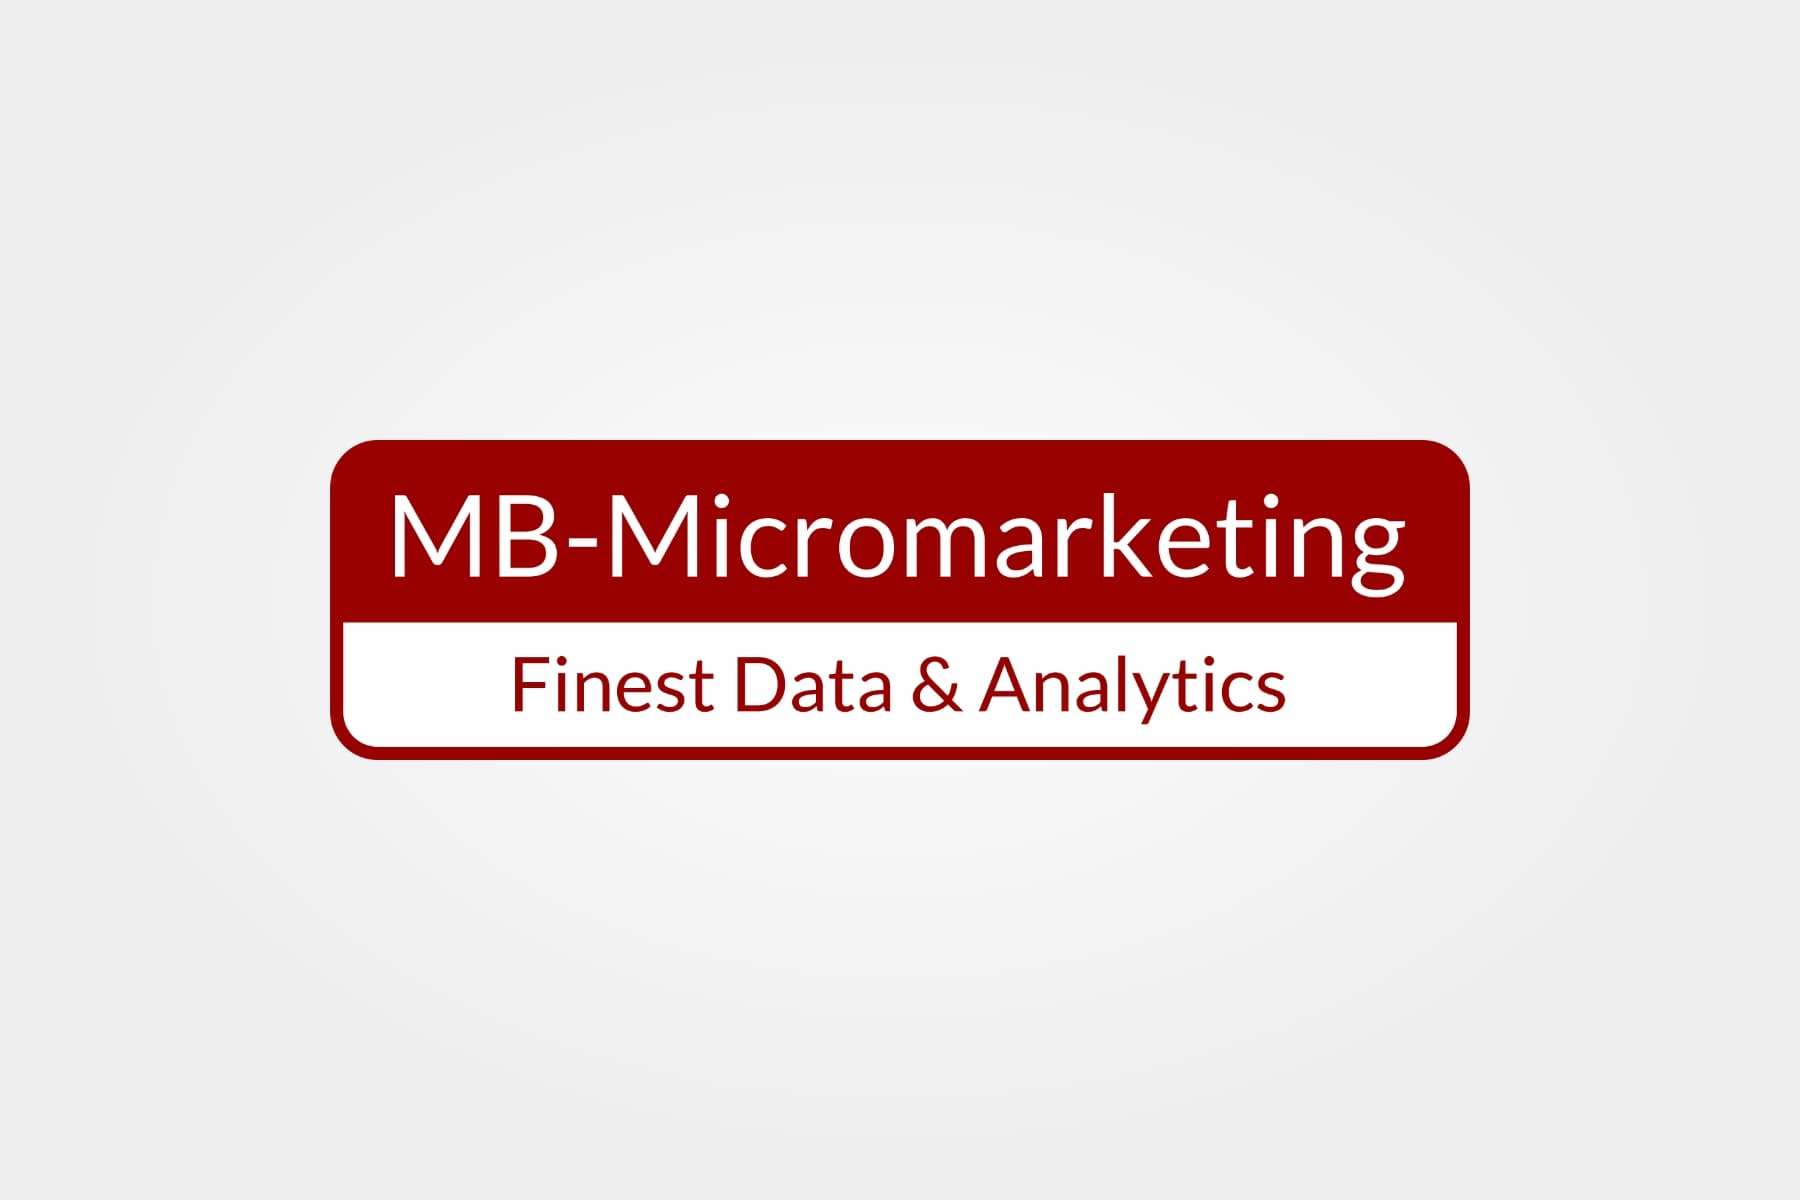 Michael Bauer Micromarketing (MBM)